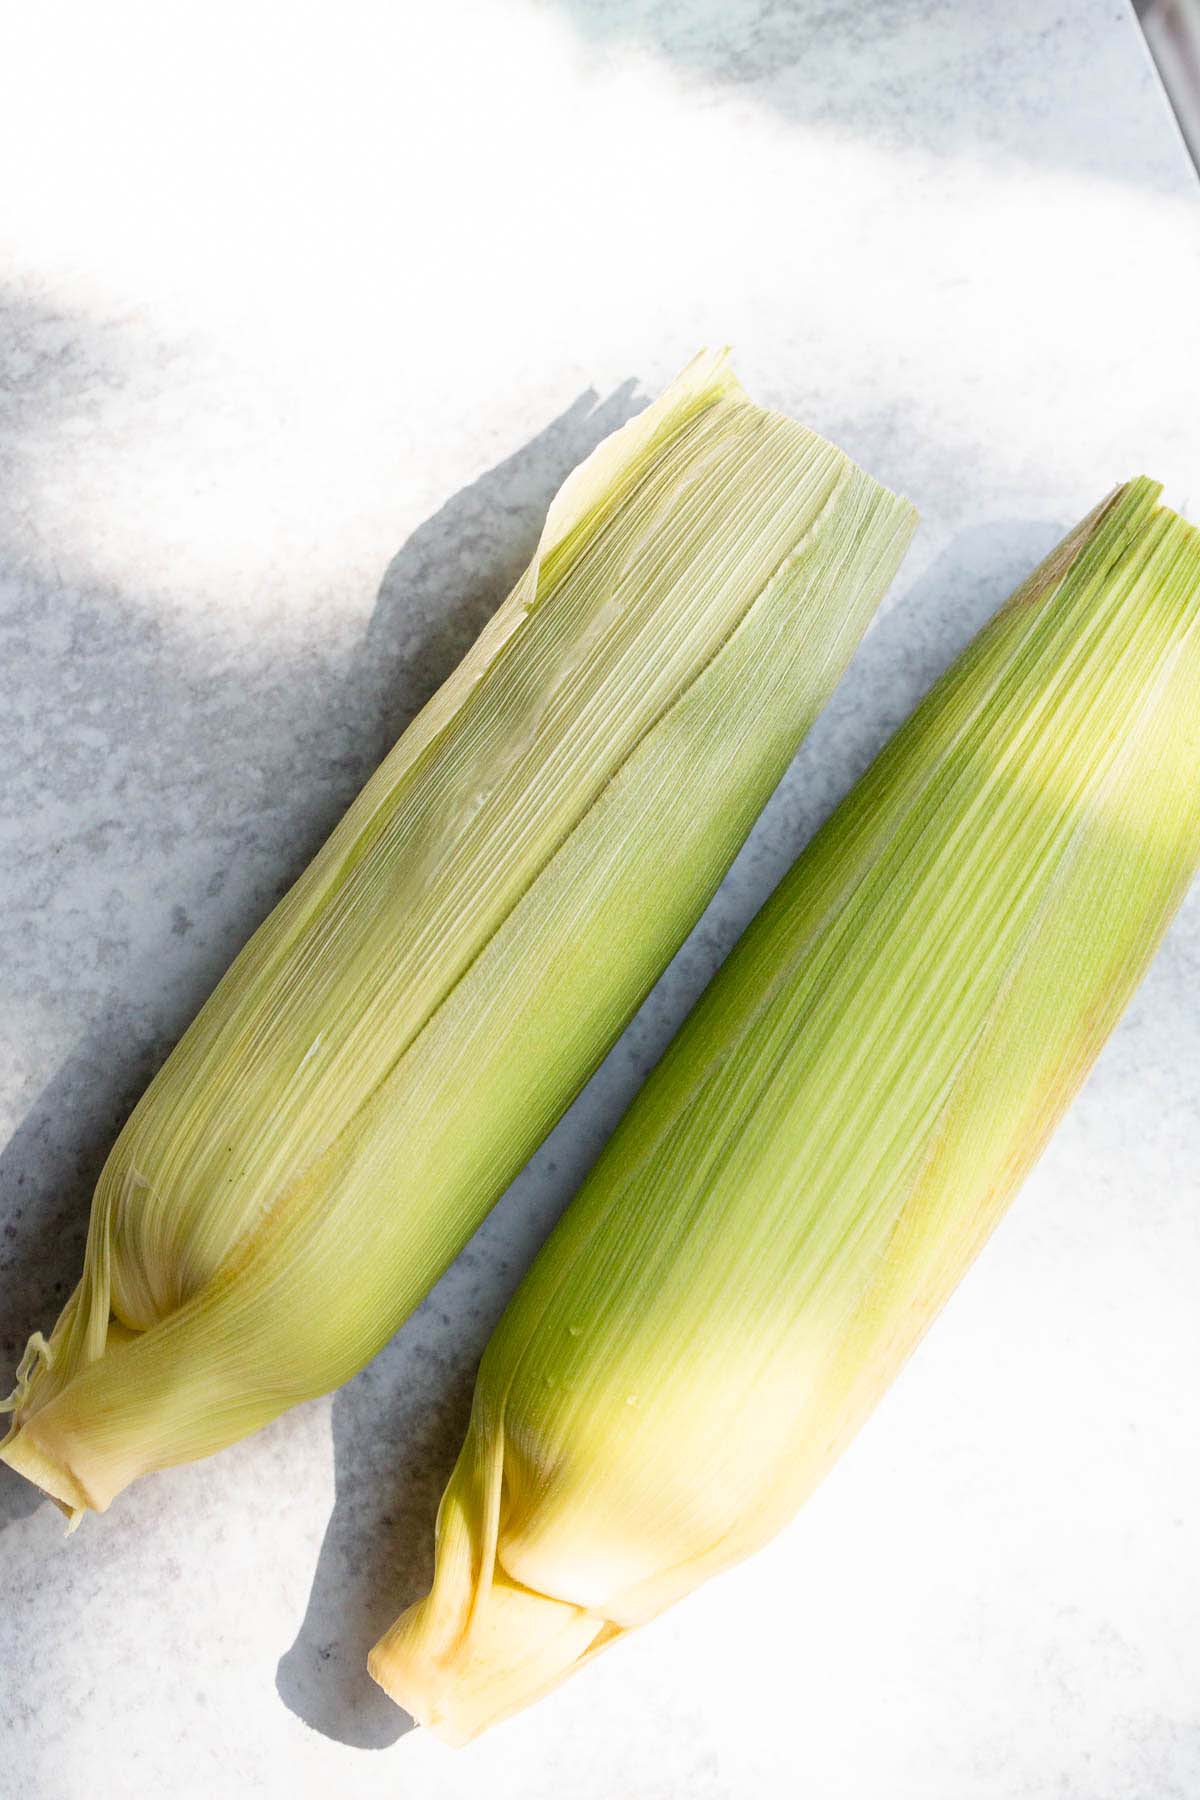 Corn on the cob in the husk